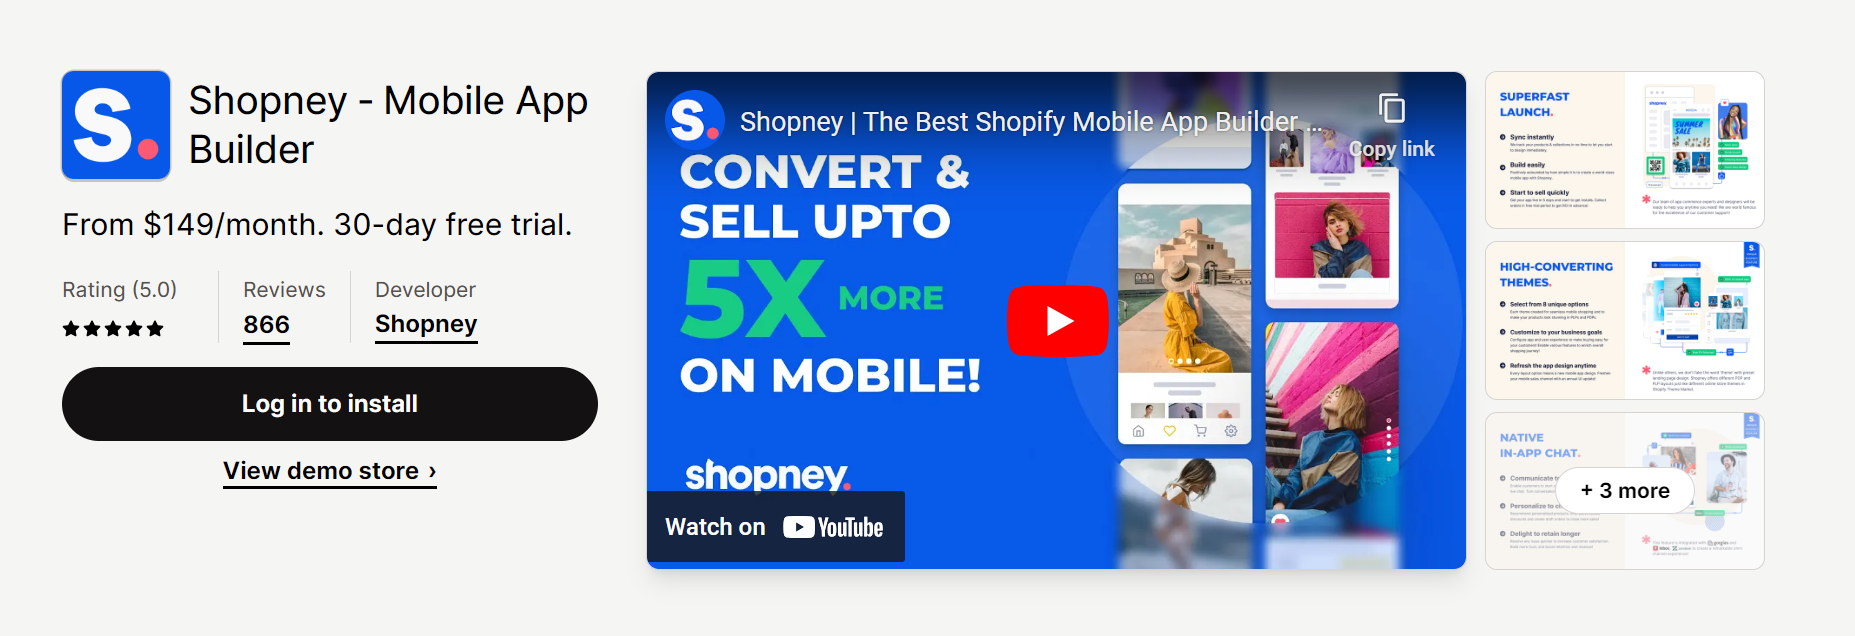 Shopney_shopify_app